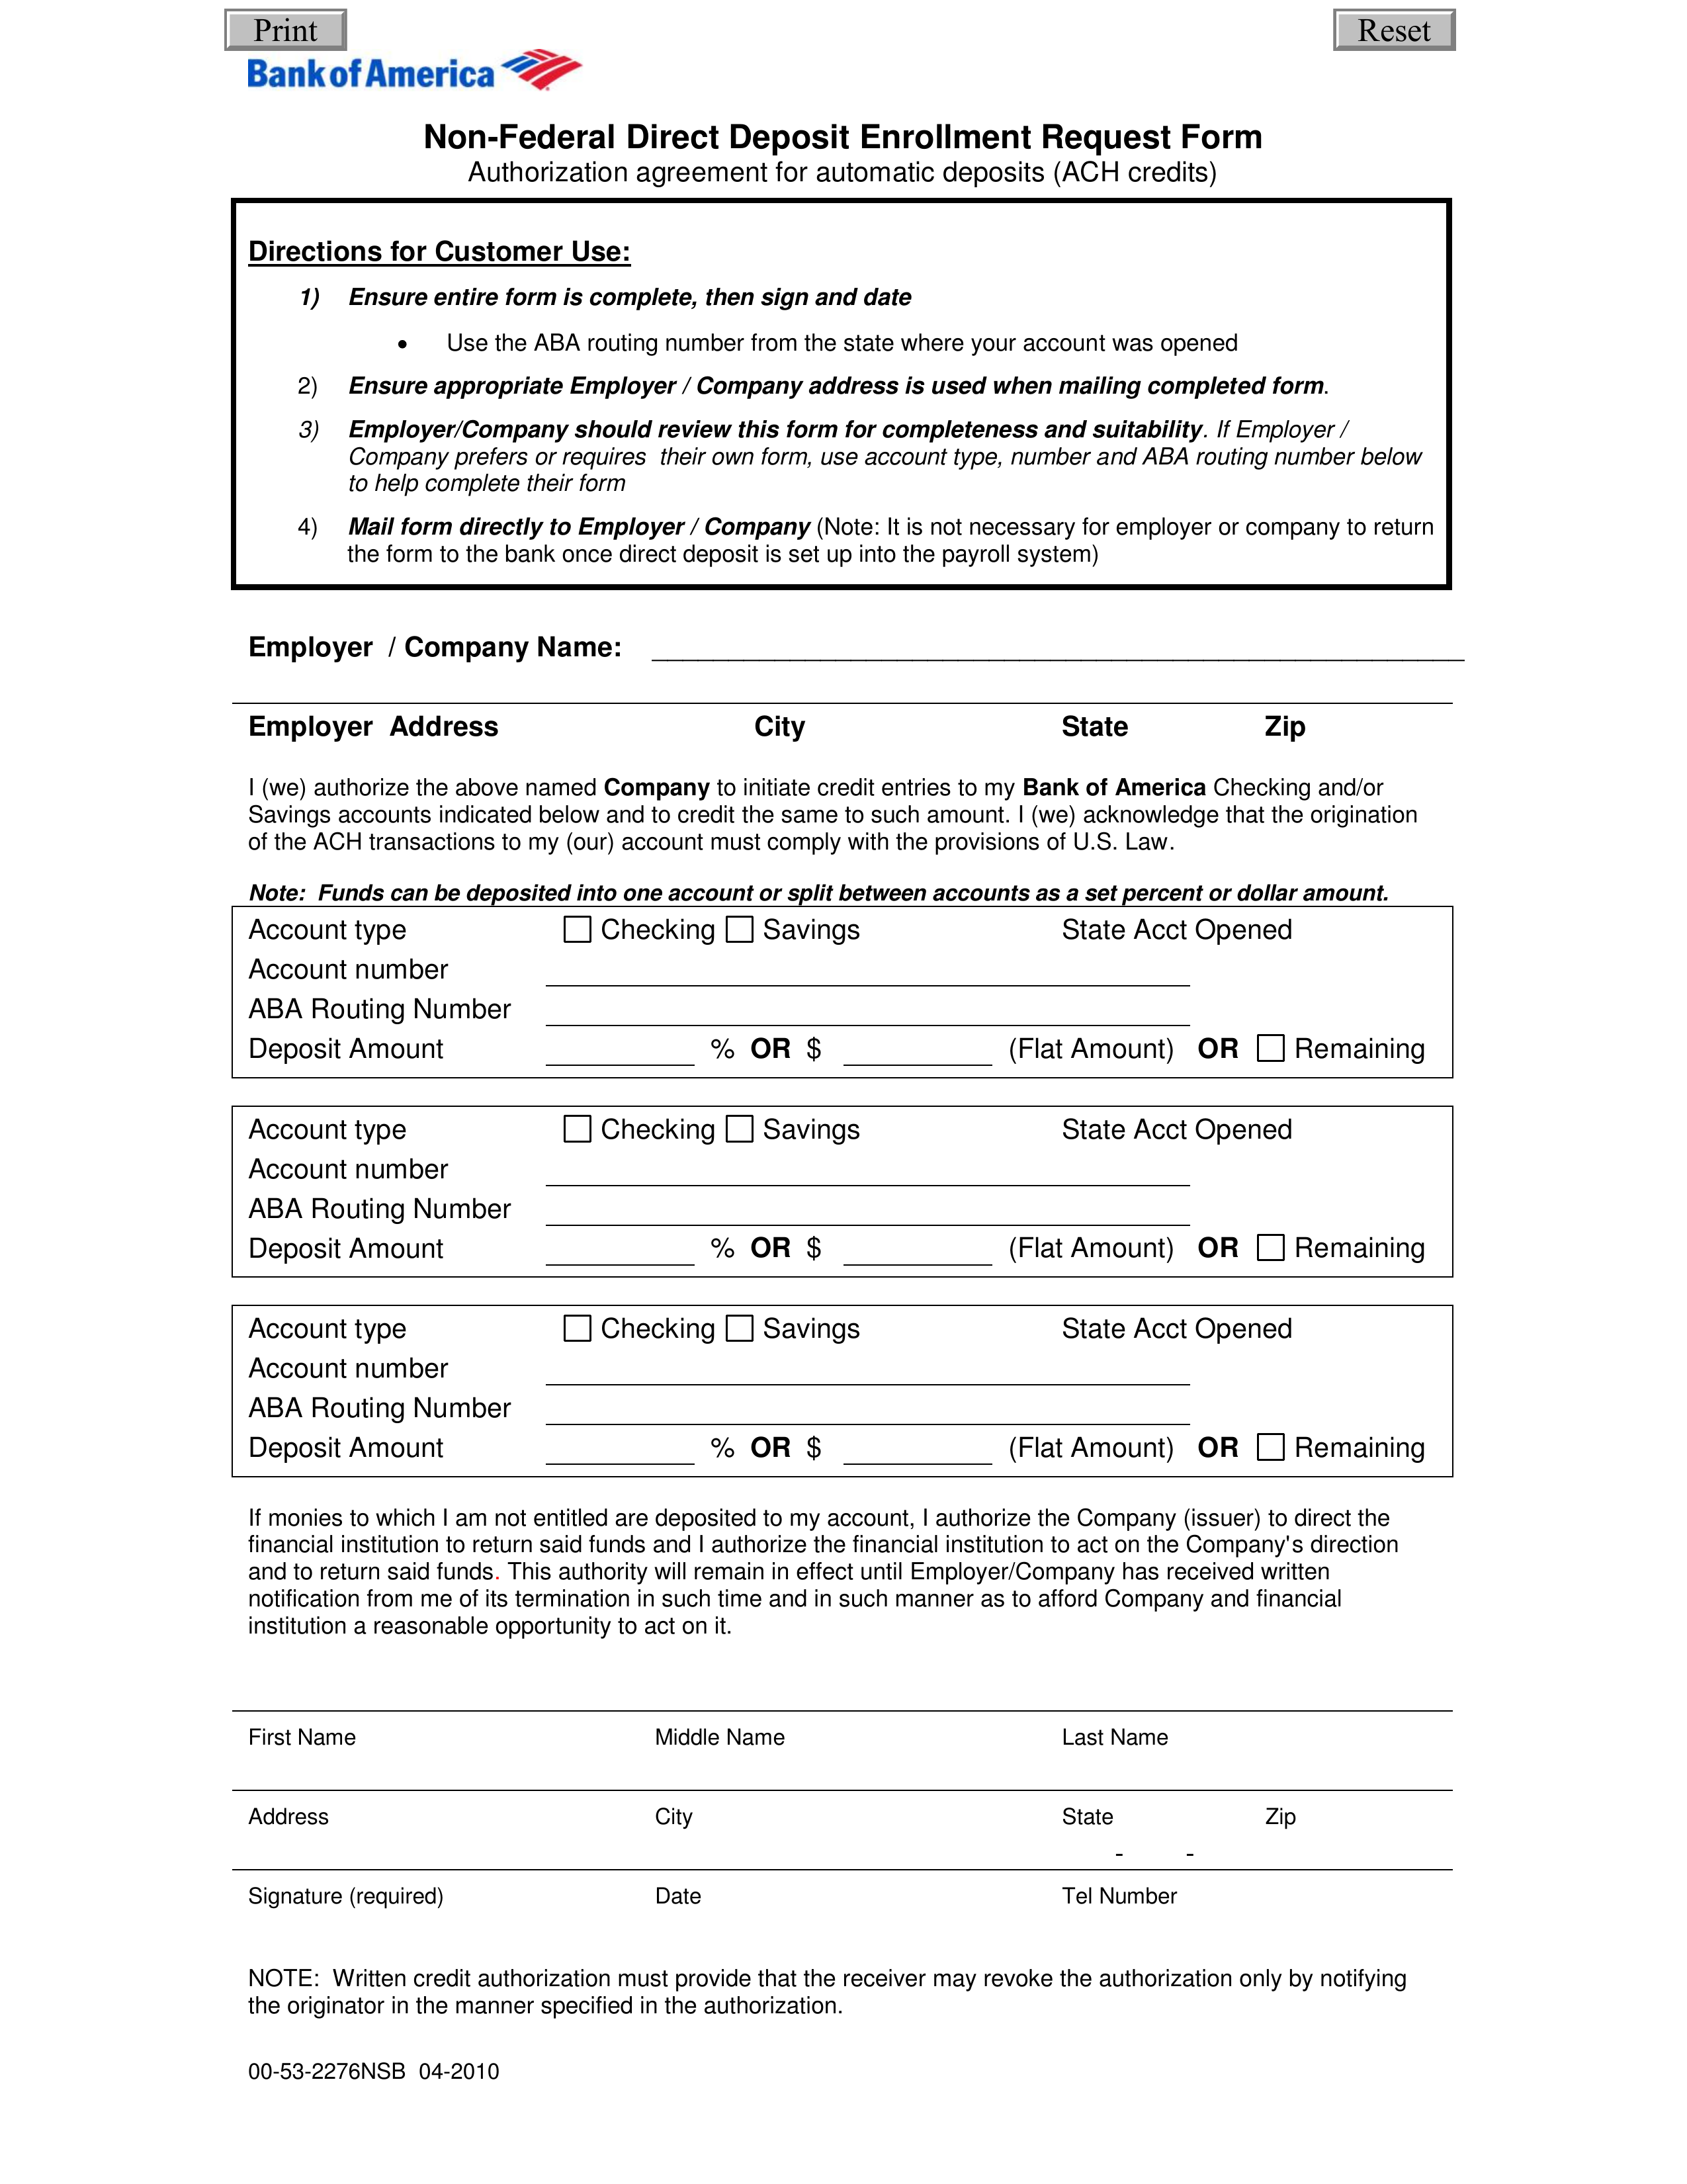 deposit form bank of america
 Free Bank of America Direct Deposit Form - PDF | eForms ...